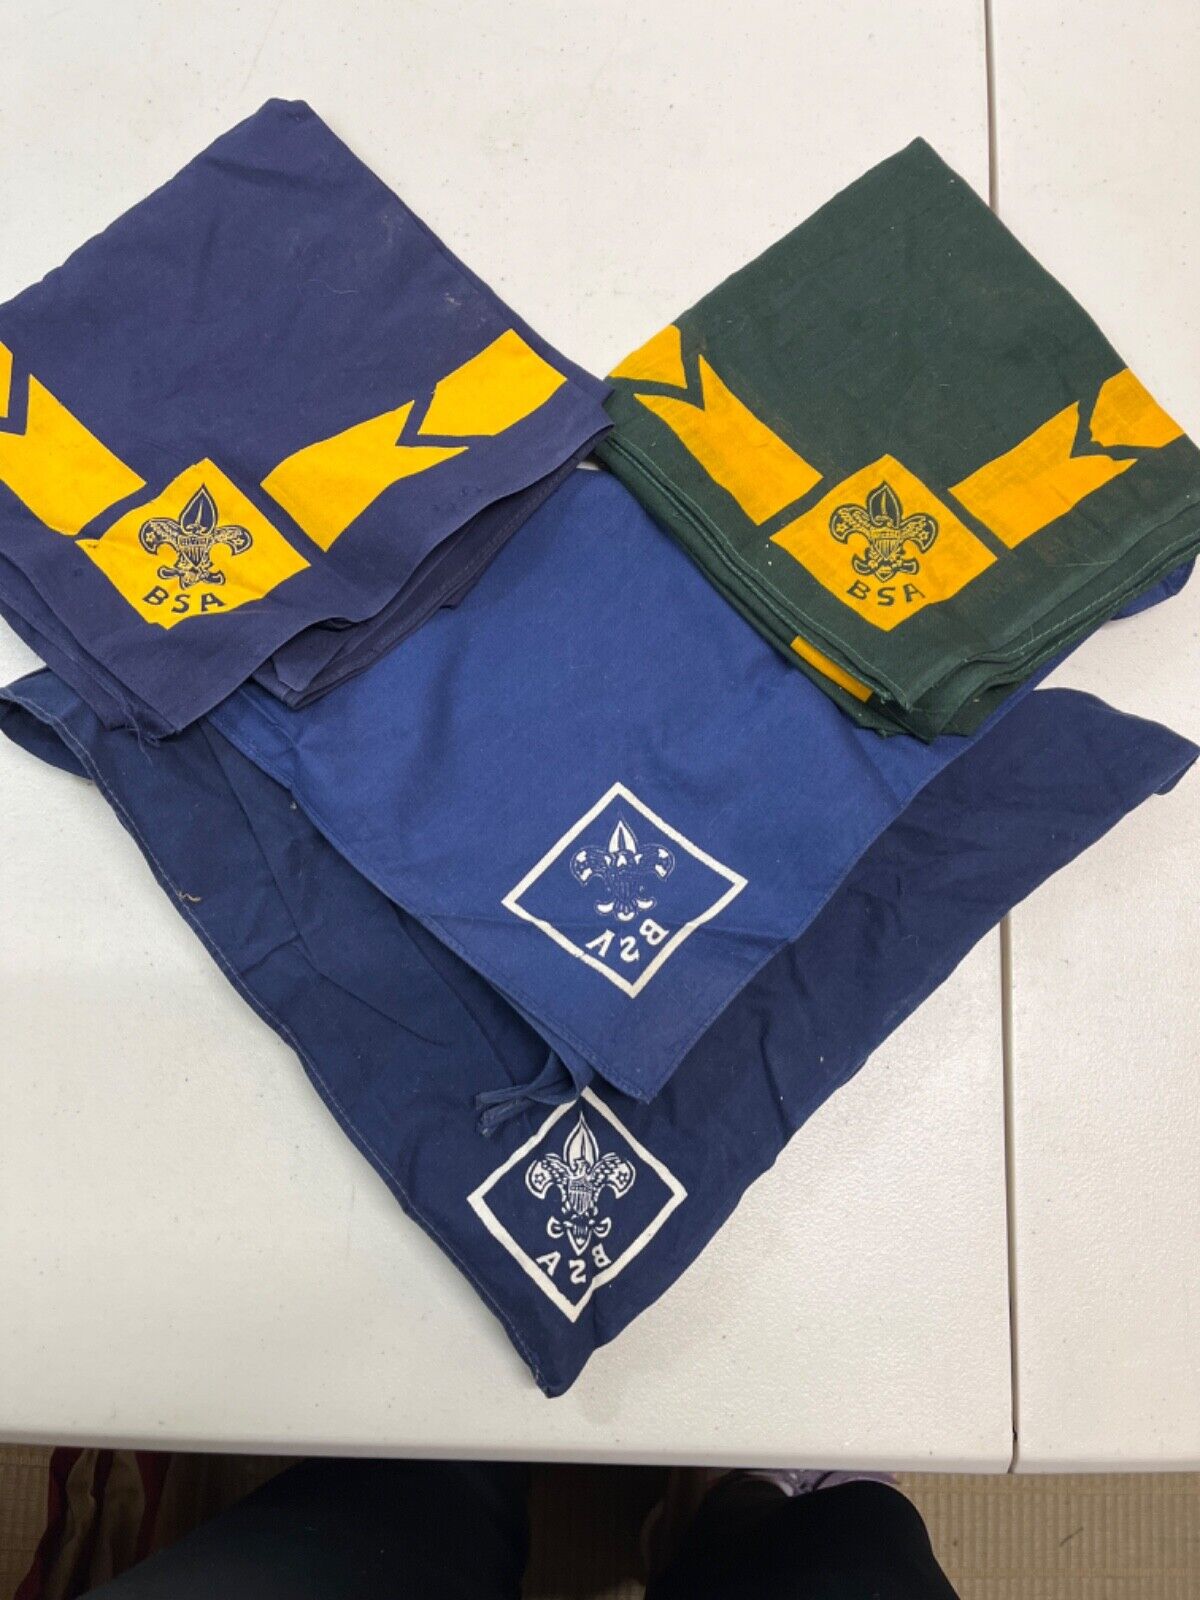 Lot of 4 Vintage Boy Scout neckerchief